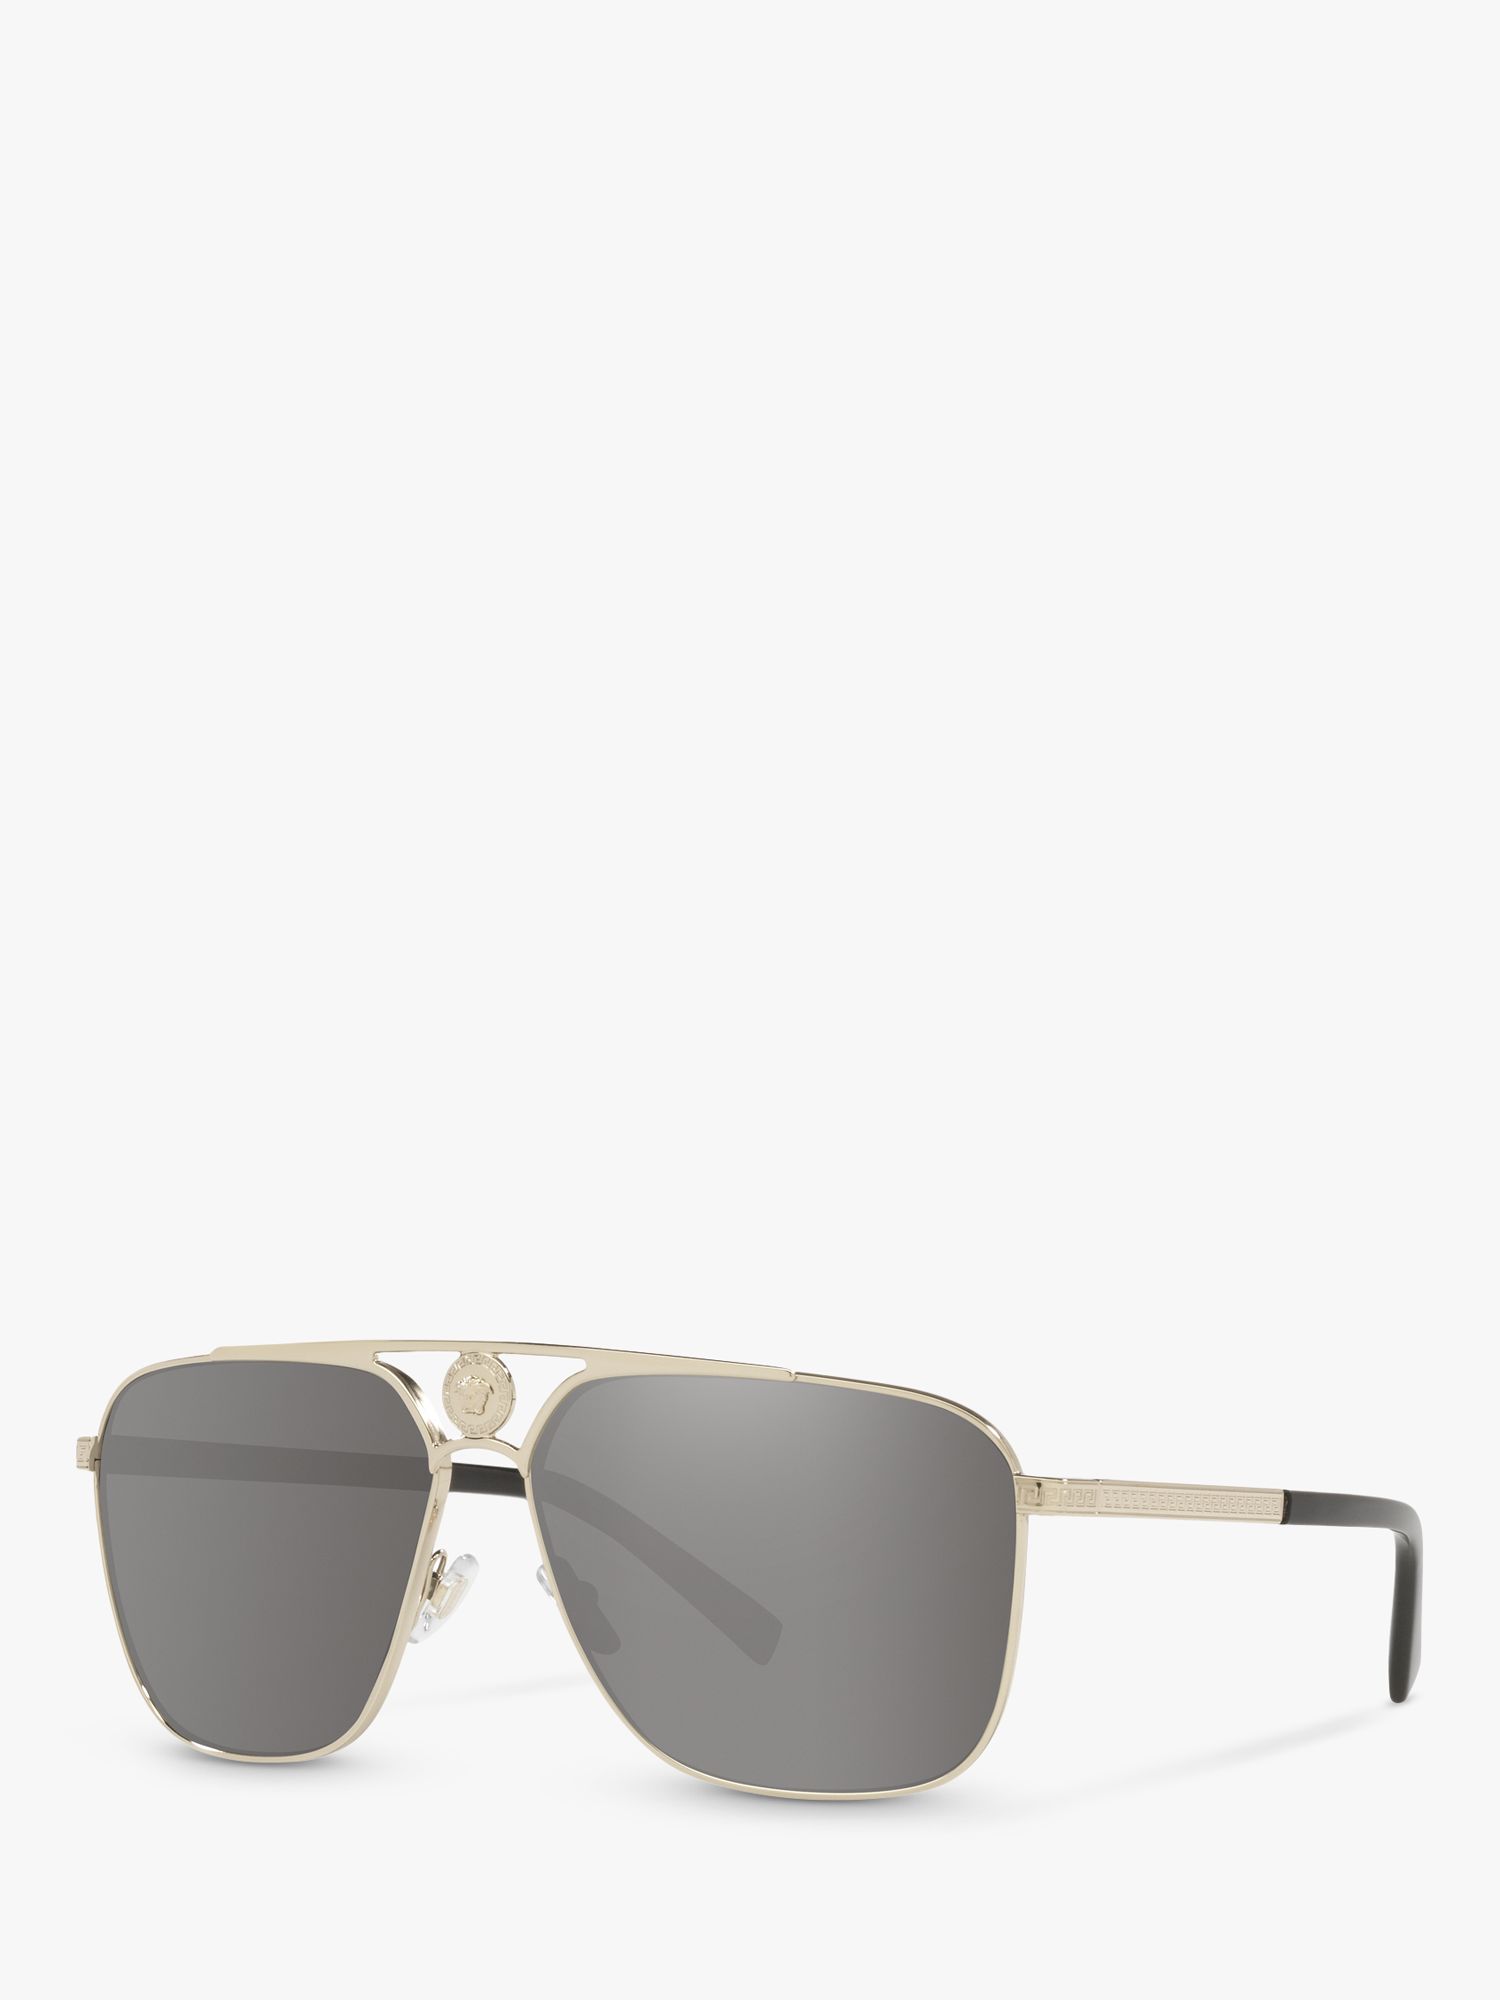 Versace VE2238 Men's Rectangular Sunglasses, Pale Gold/Mirror Grey at ...